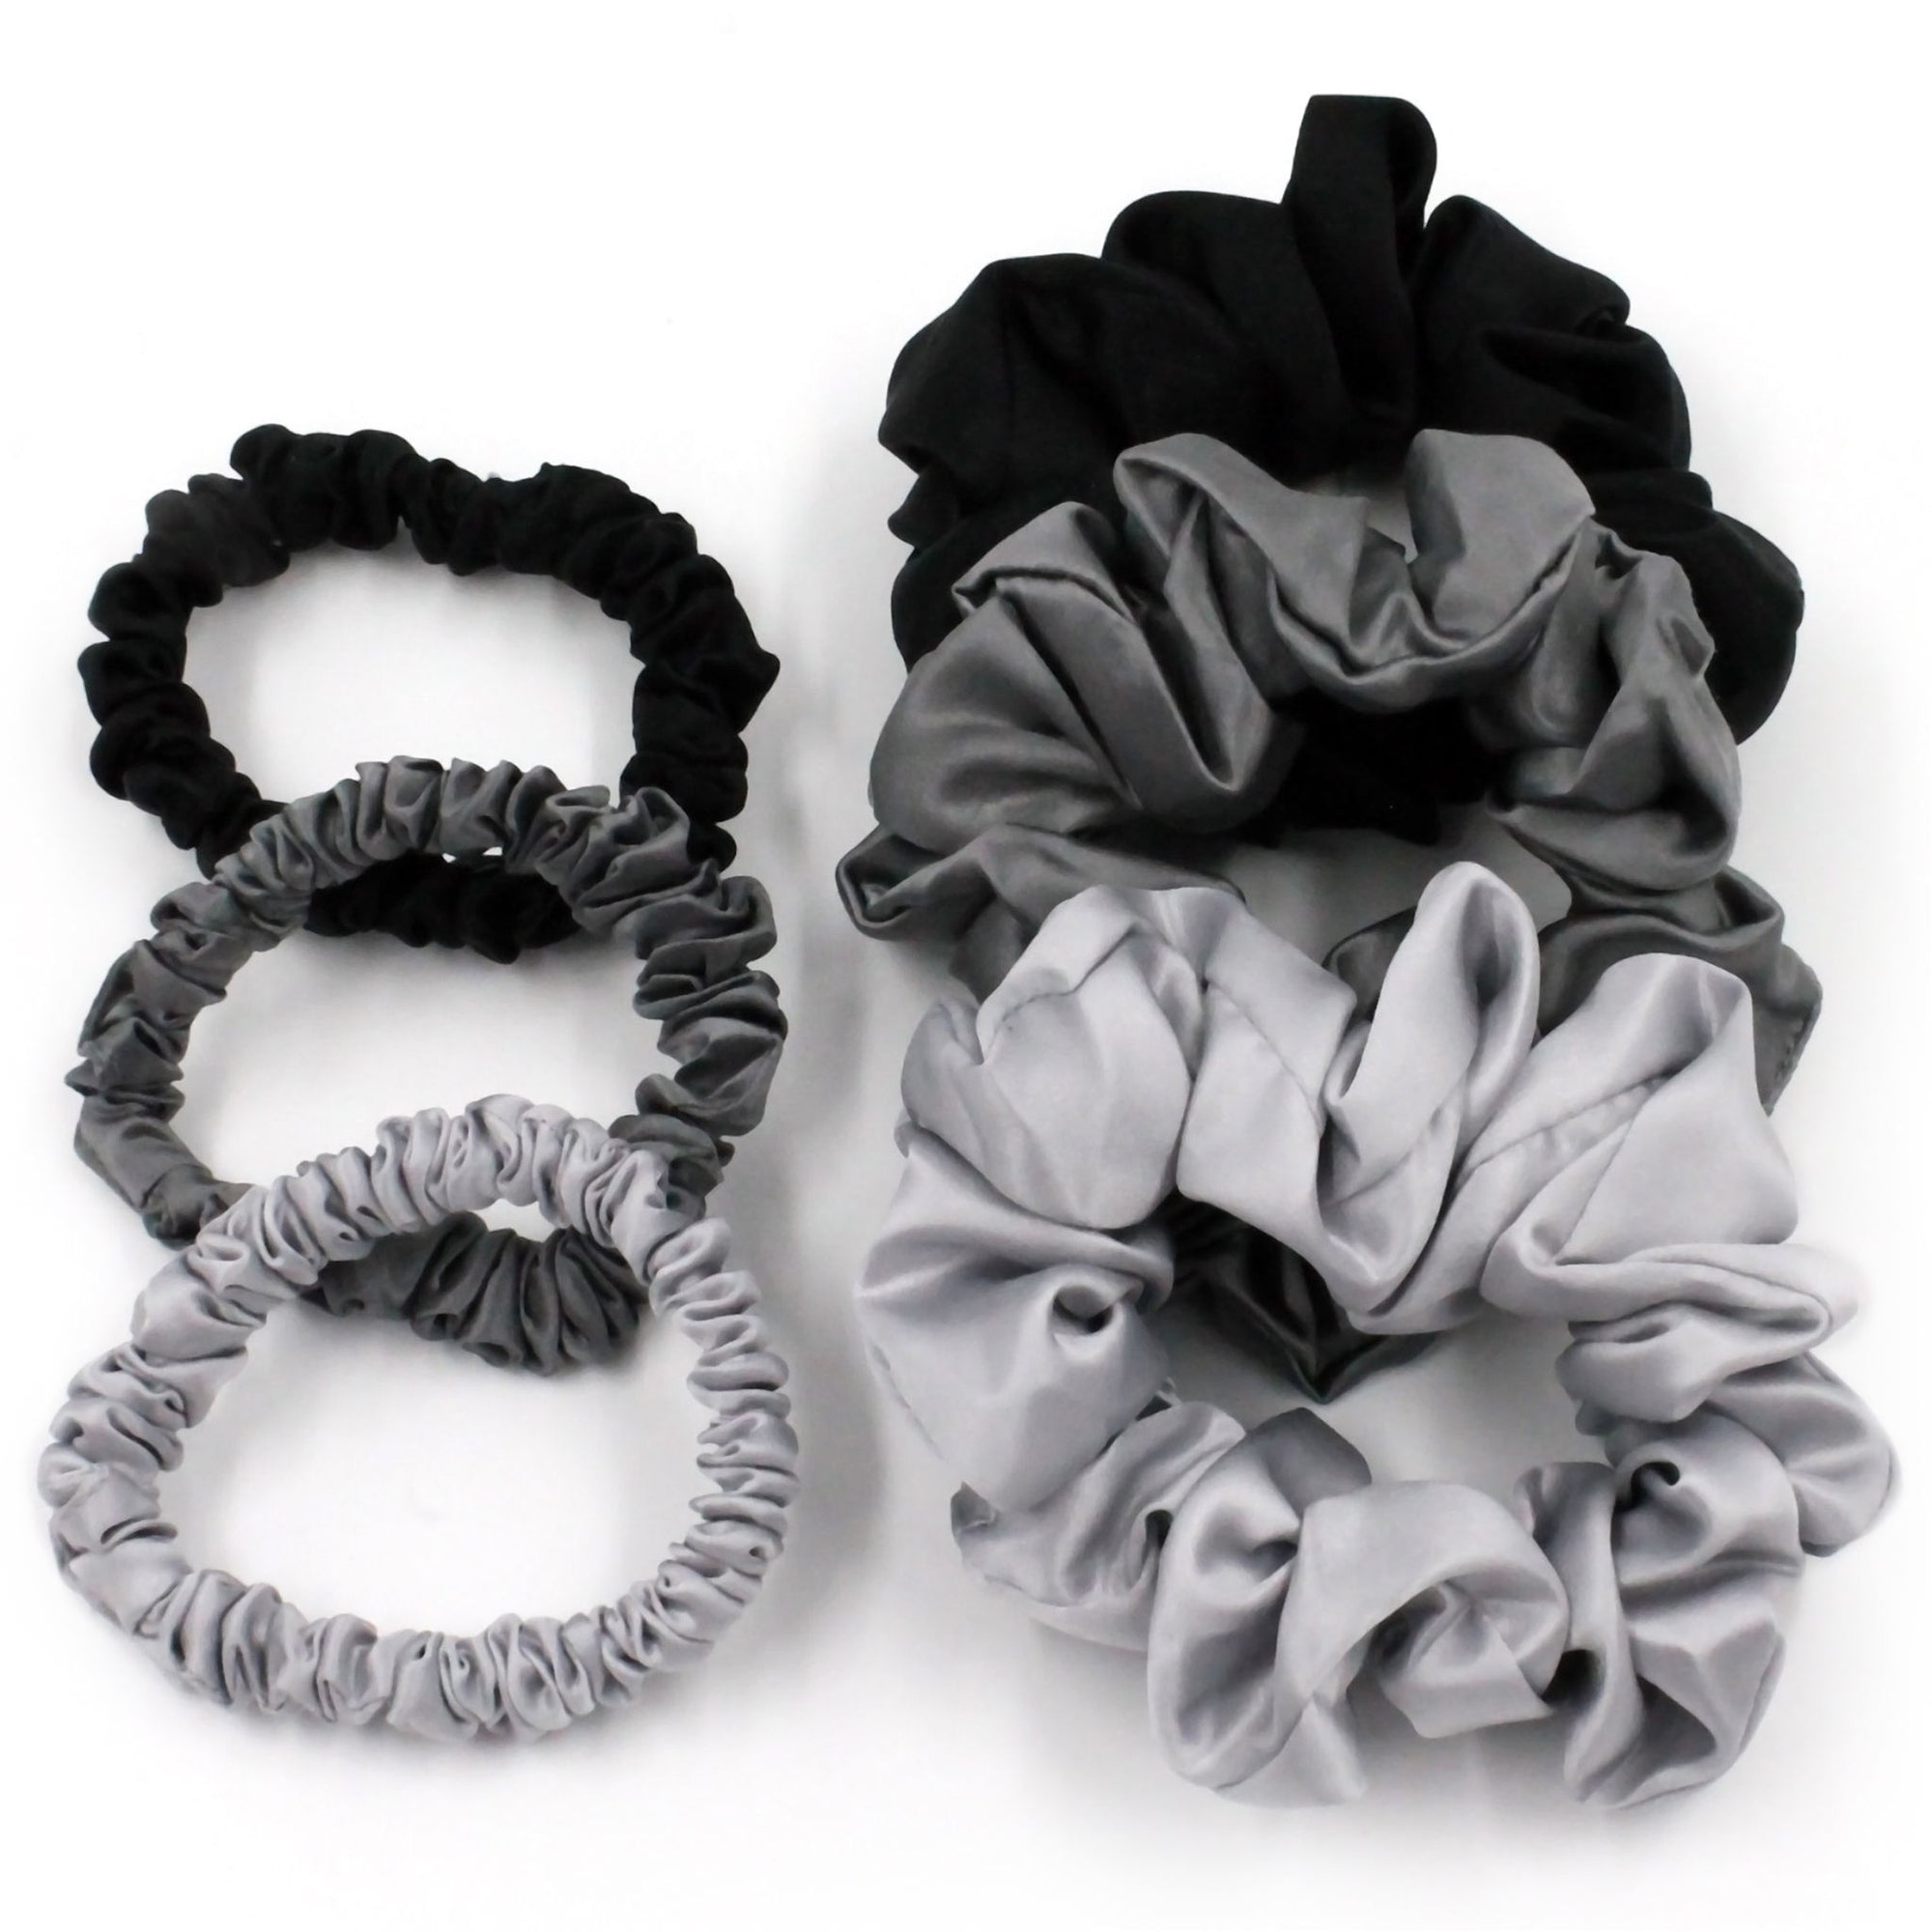 Mulberry Park Silks Silk Scrunchies - Midnight Black, Shimmery Silver, and Gunmetal Grey Top